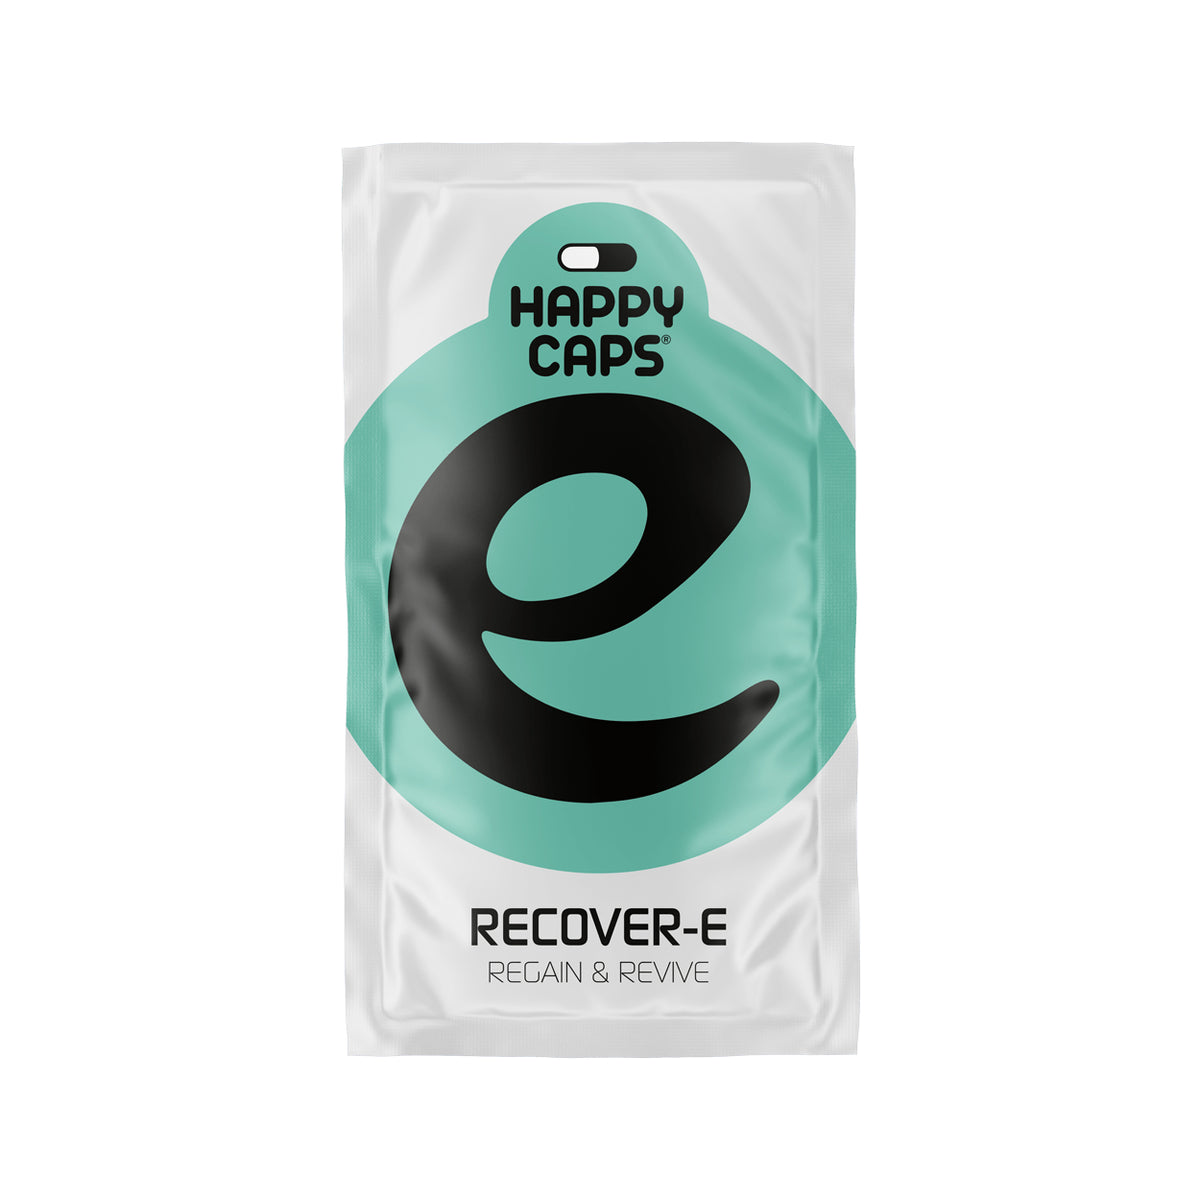 Recover-E (Happy Caps) 4 veg caps